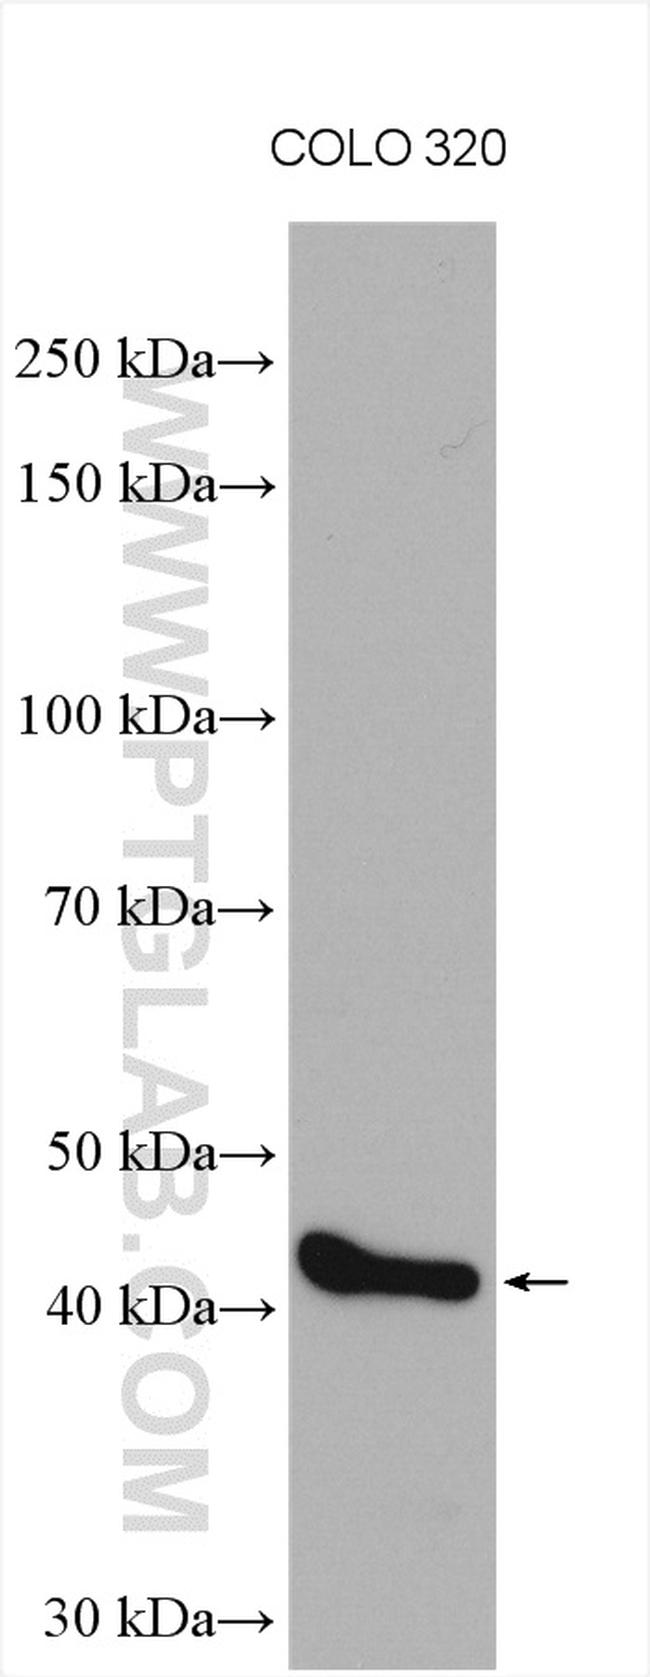 SMPDL3B Antibody in Western Blot (WB)